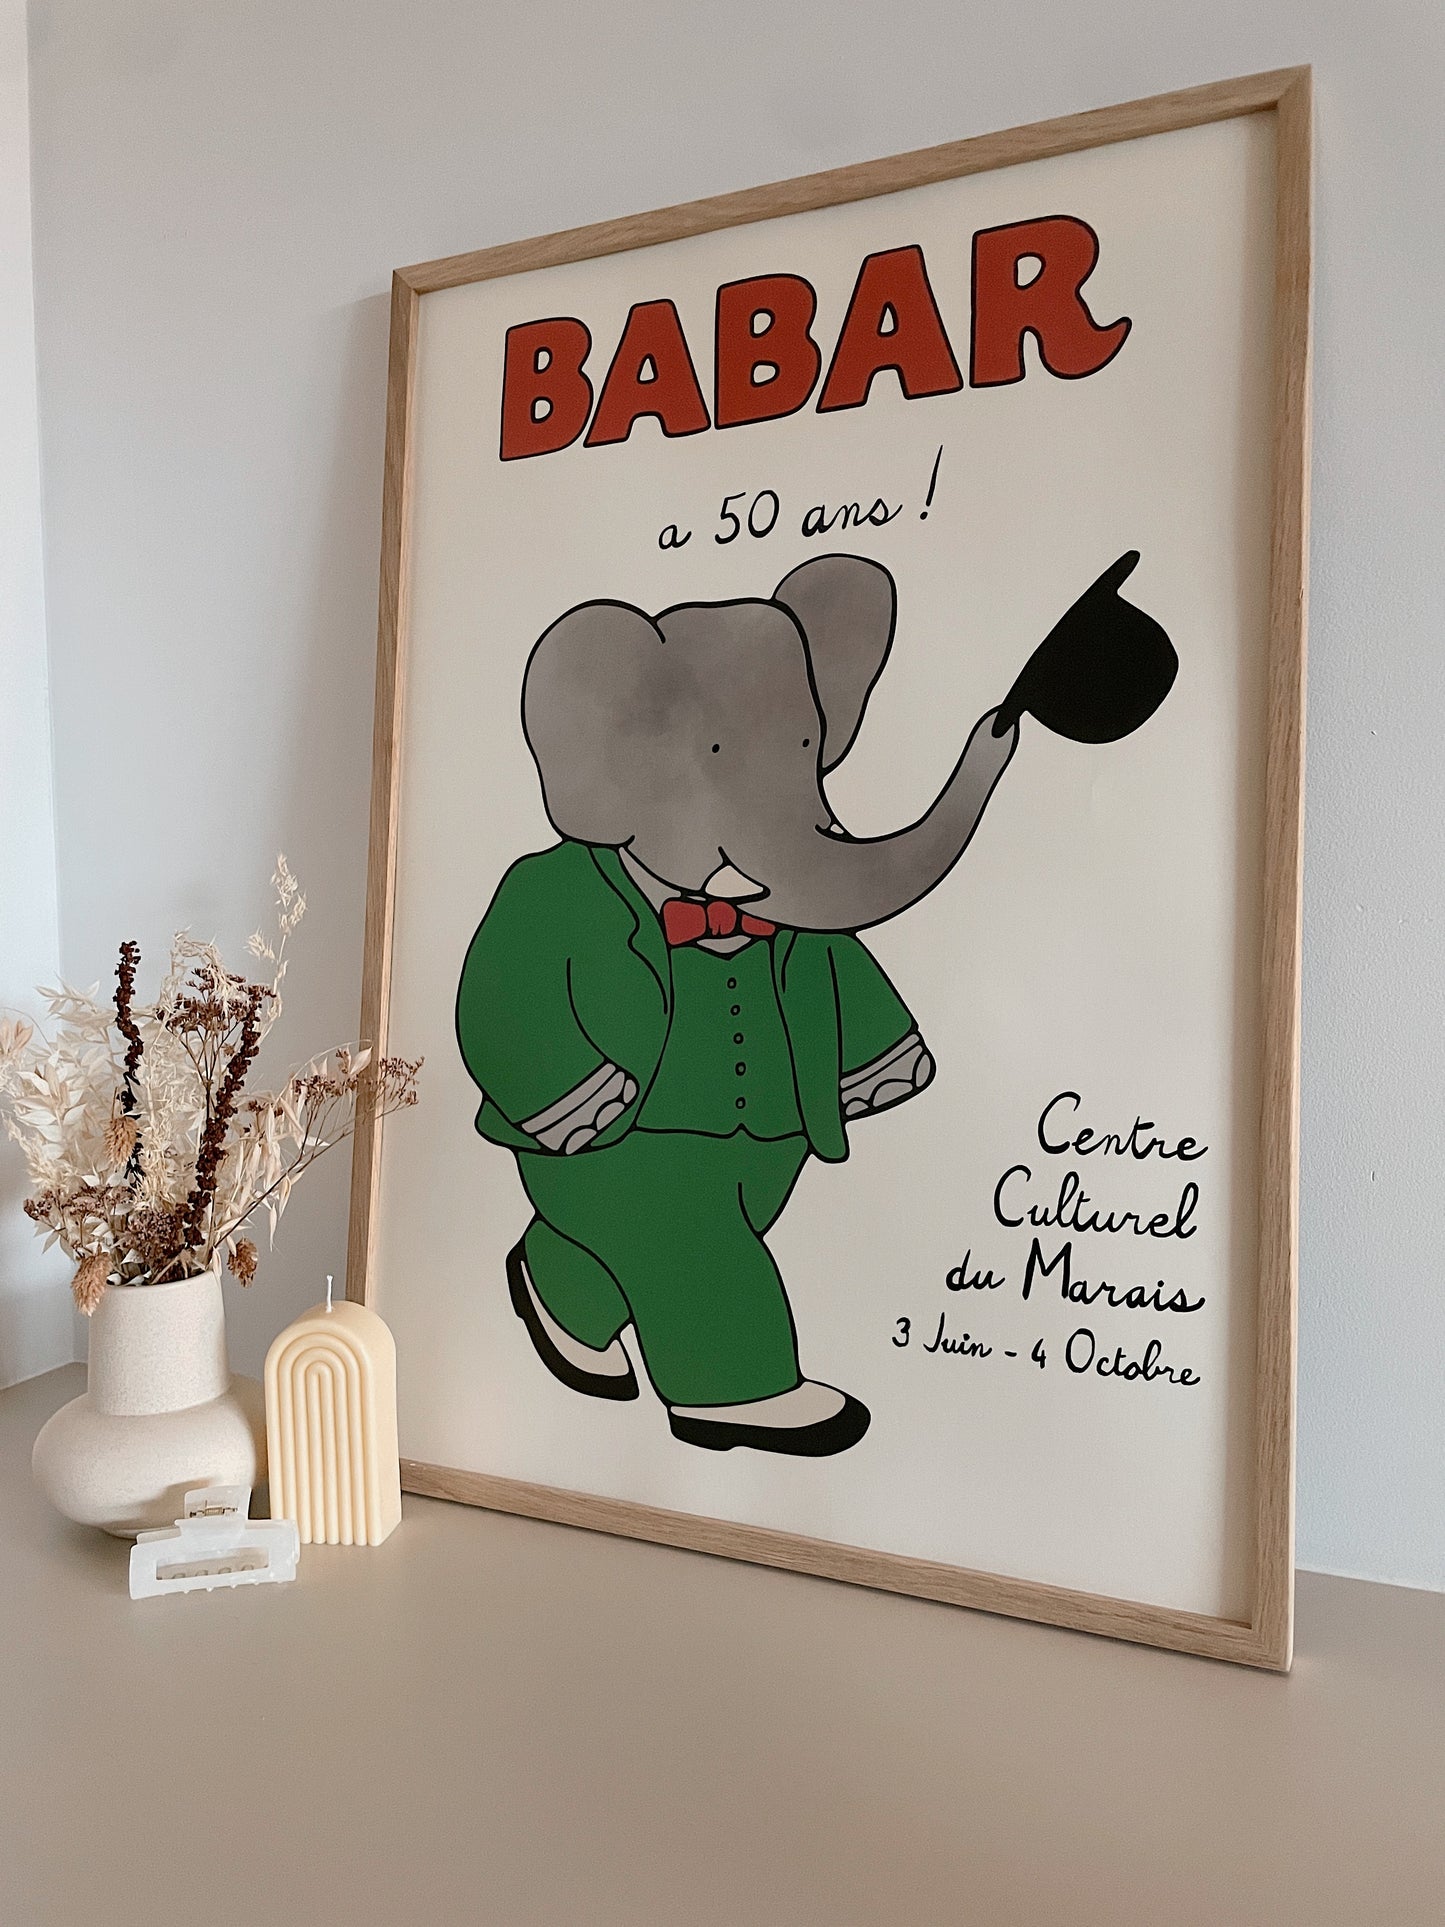 BABAR a 50 Ans - Jean De Brunhoff print 50x70